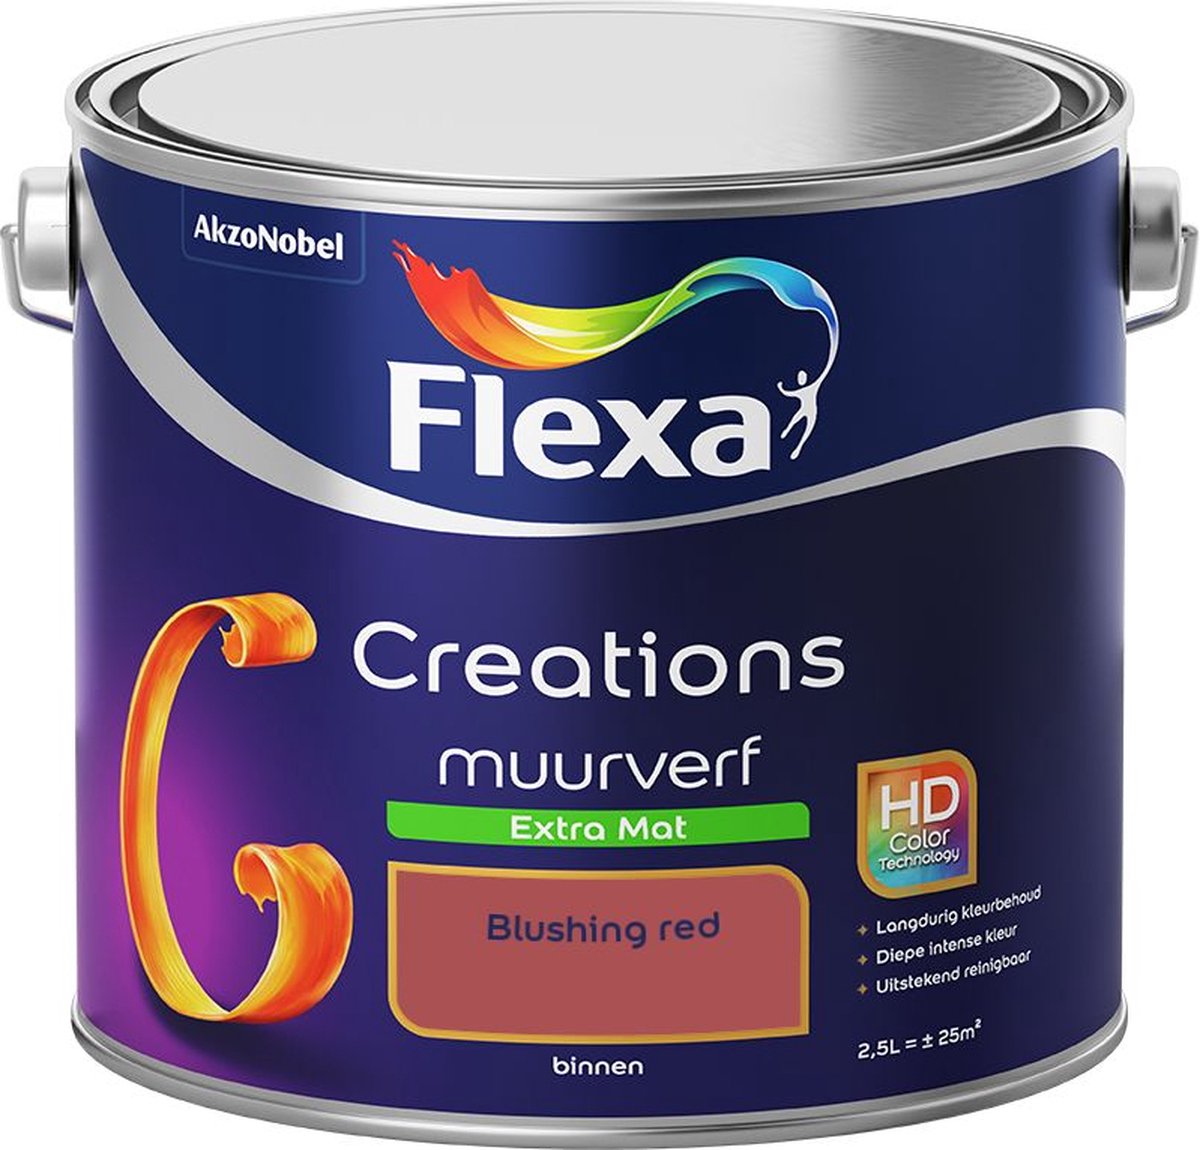 Flexa | Creations Muurverf Extra Mat | Blushing red - Kleur van het jaar 2012 | 2.5L